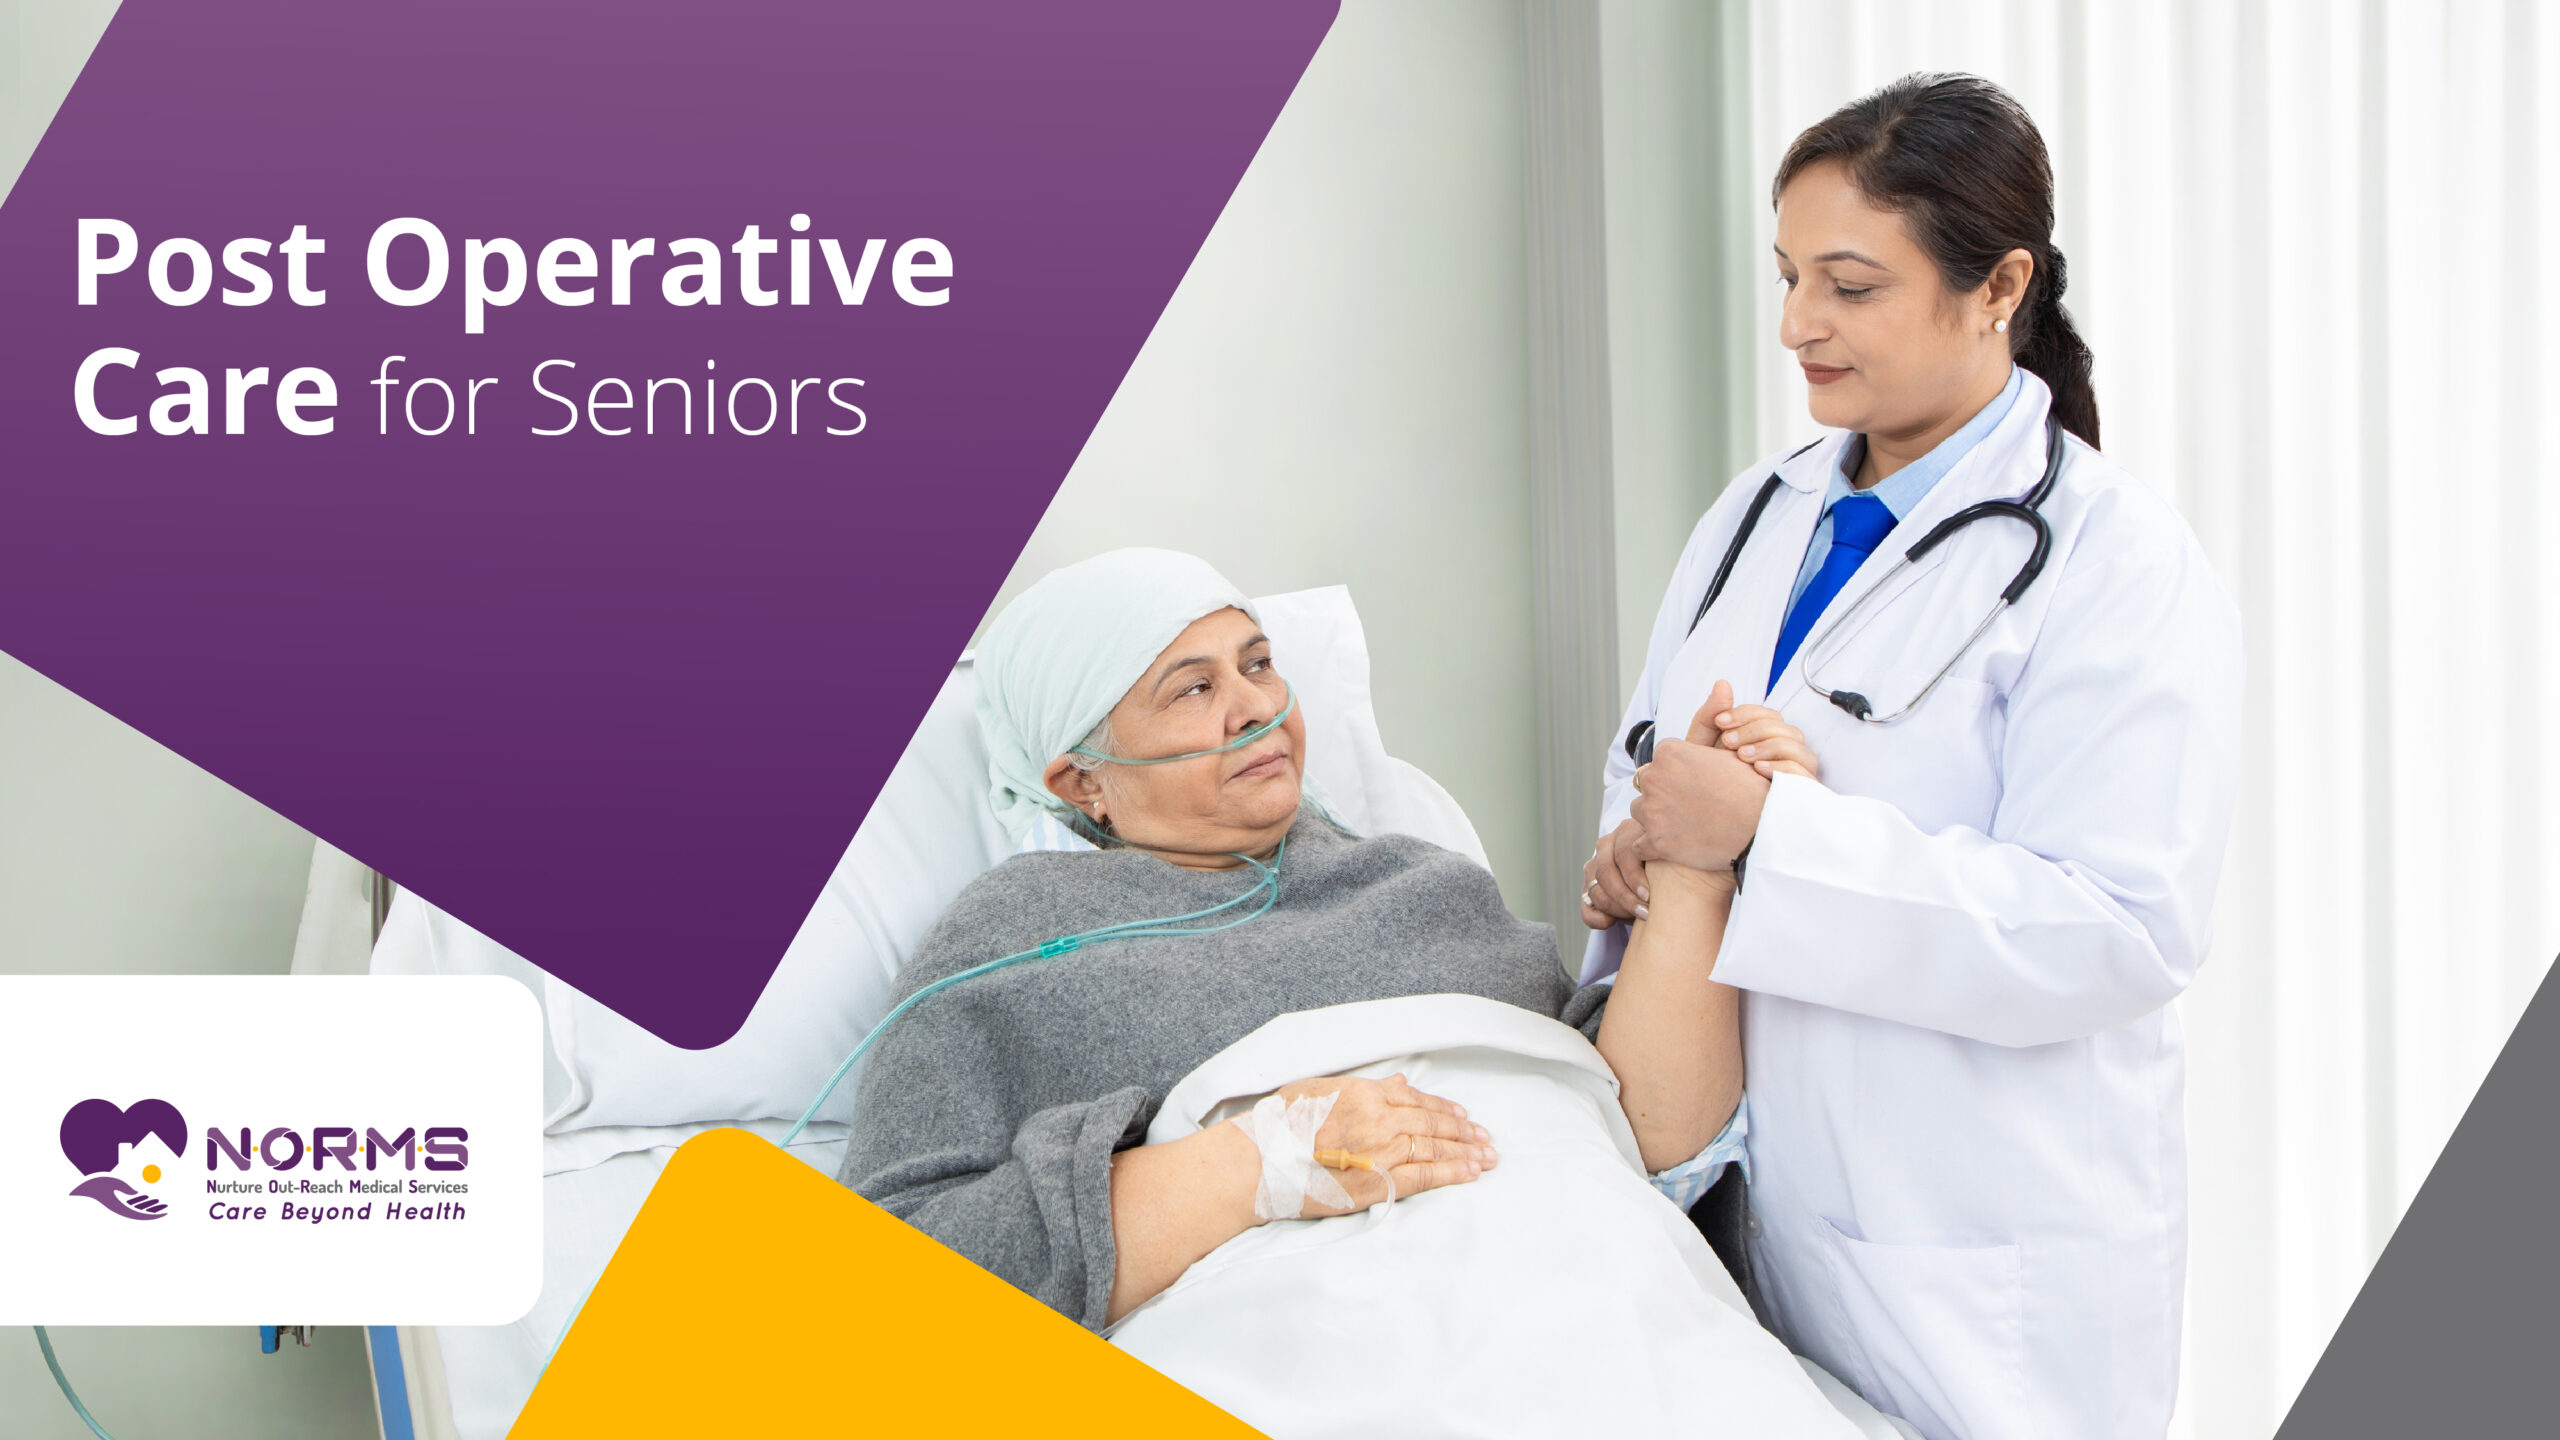 Post-operative care for seniors